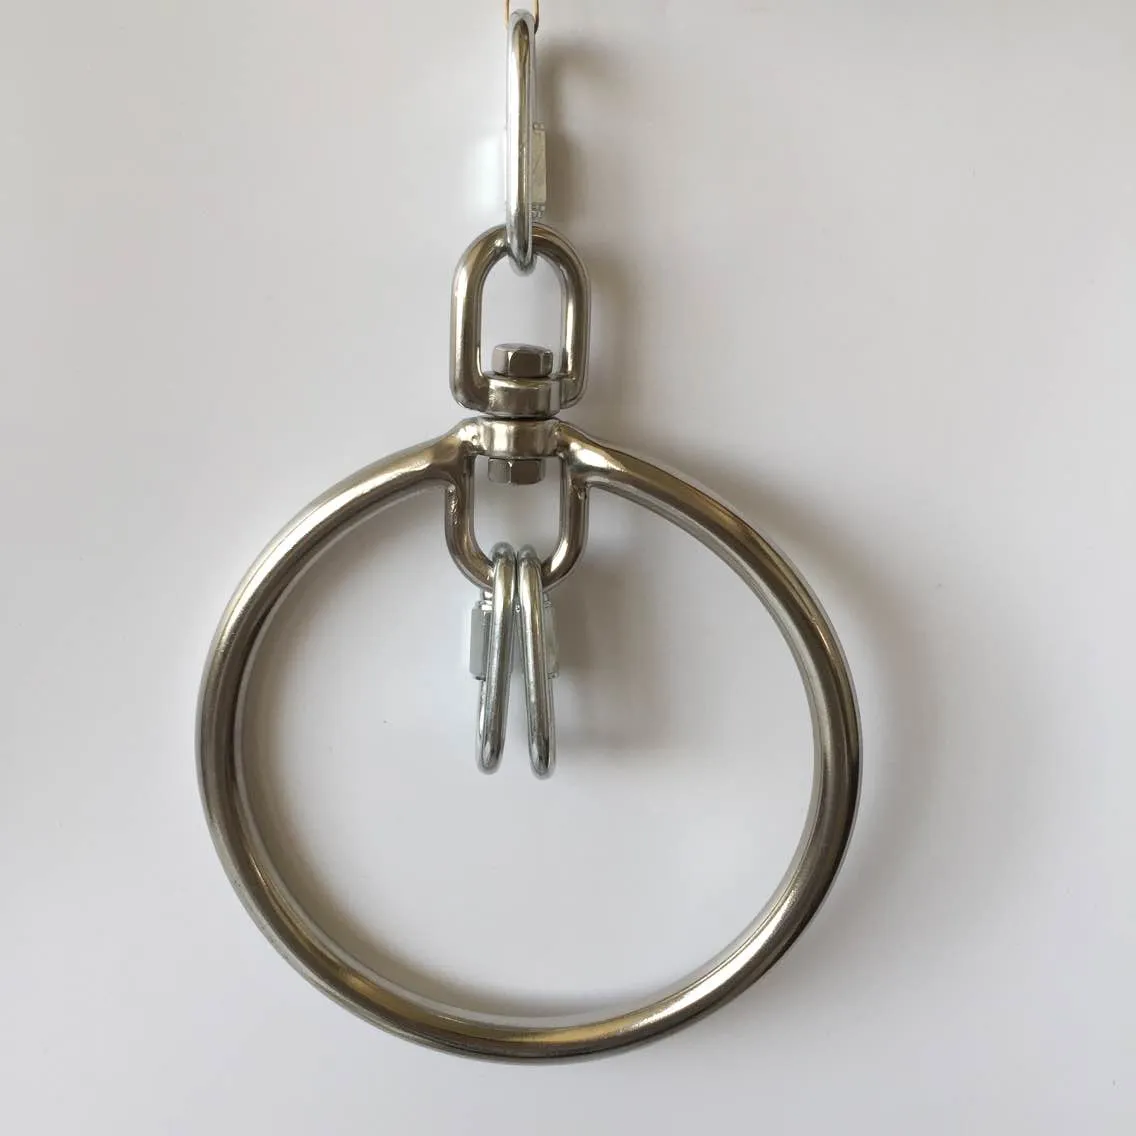 2016 New Sex toys bdsm sm bondage slave tools Bundled retaining ring suspension loop